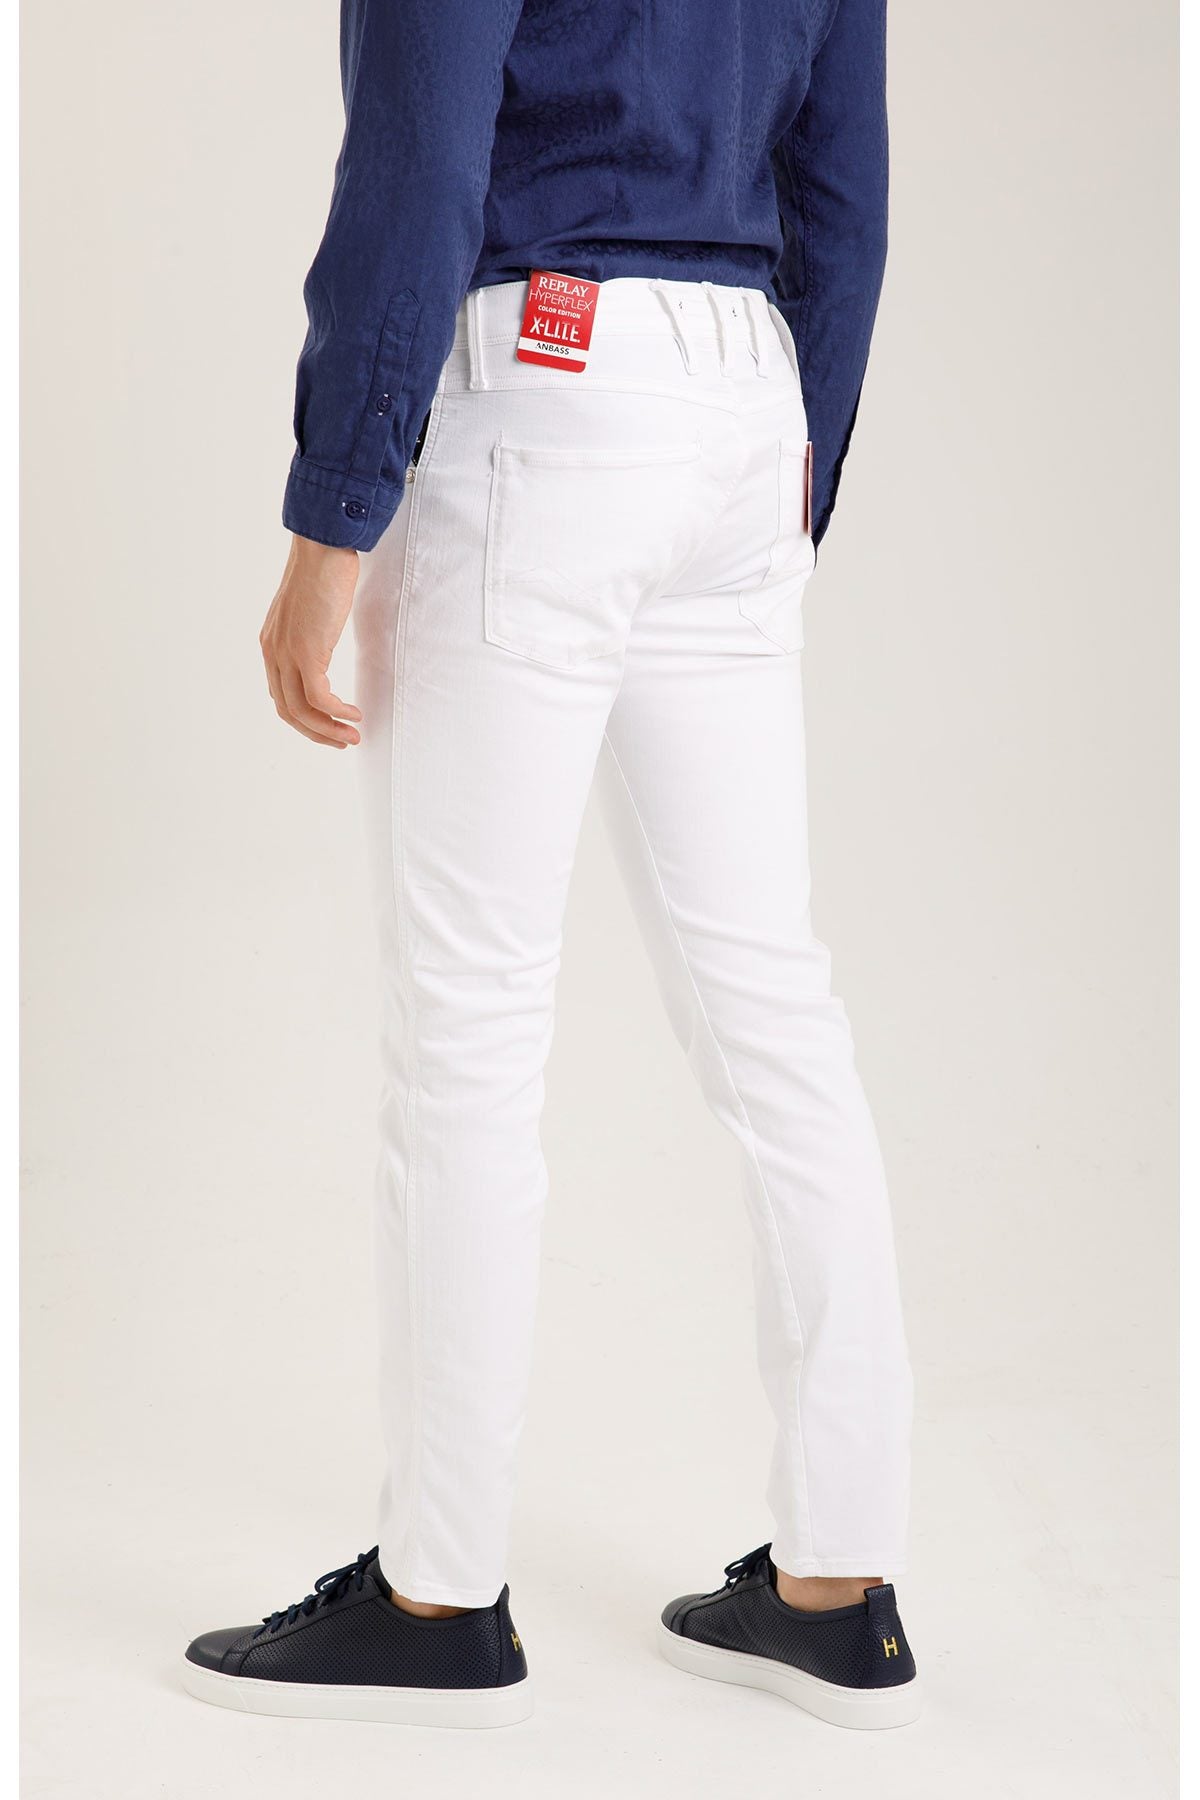 Replay Hyperflex Color Edition X-Lite Anbass Slim Fit Jeans-Libas Trendy Fashion Store